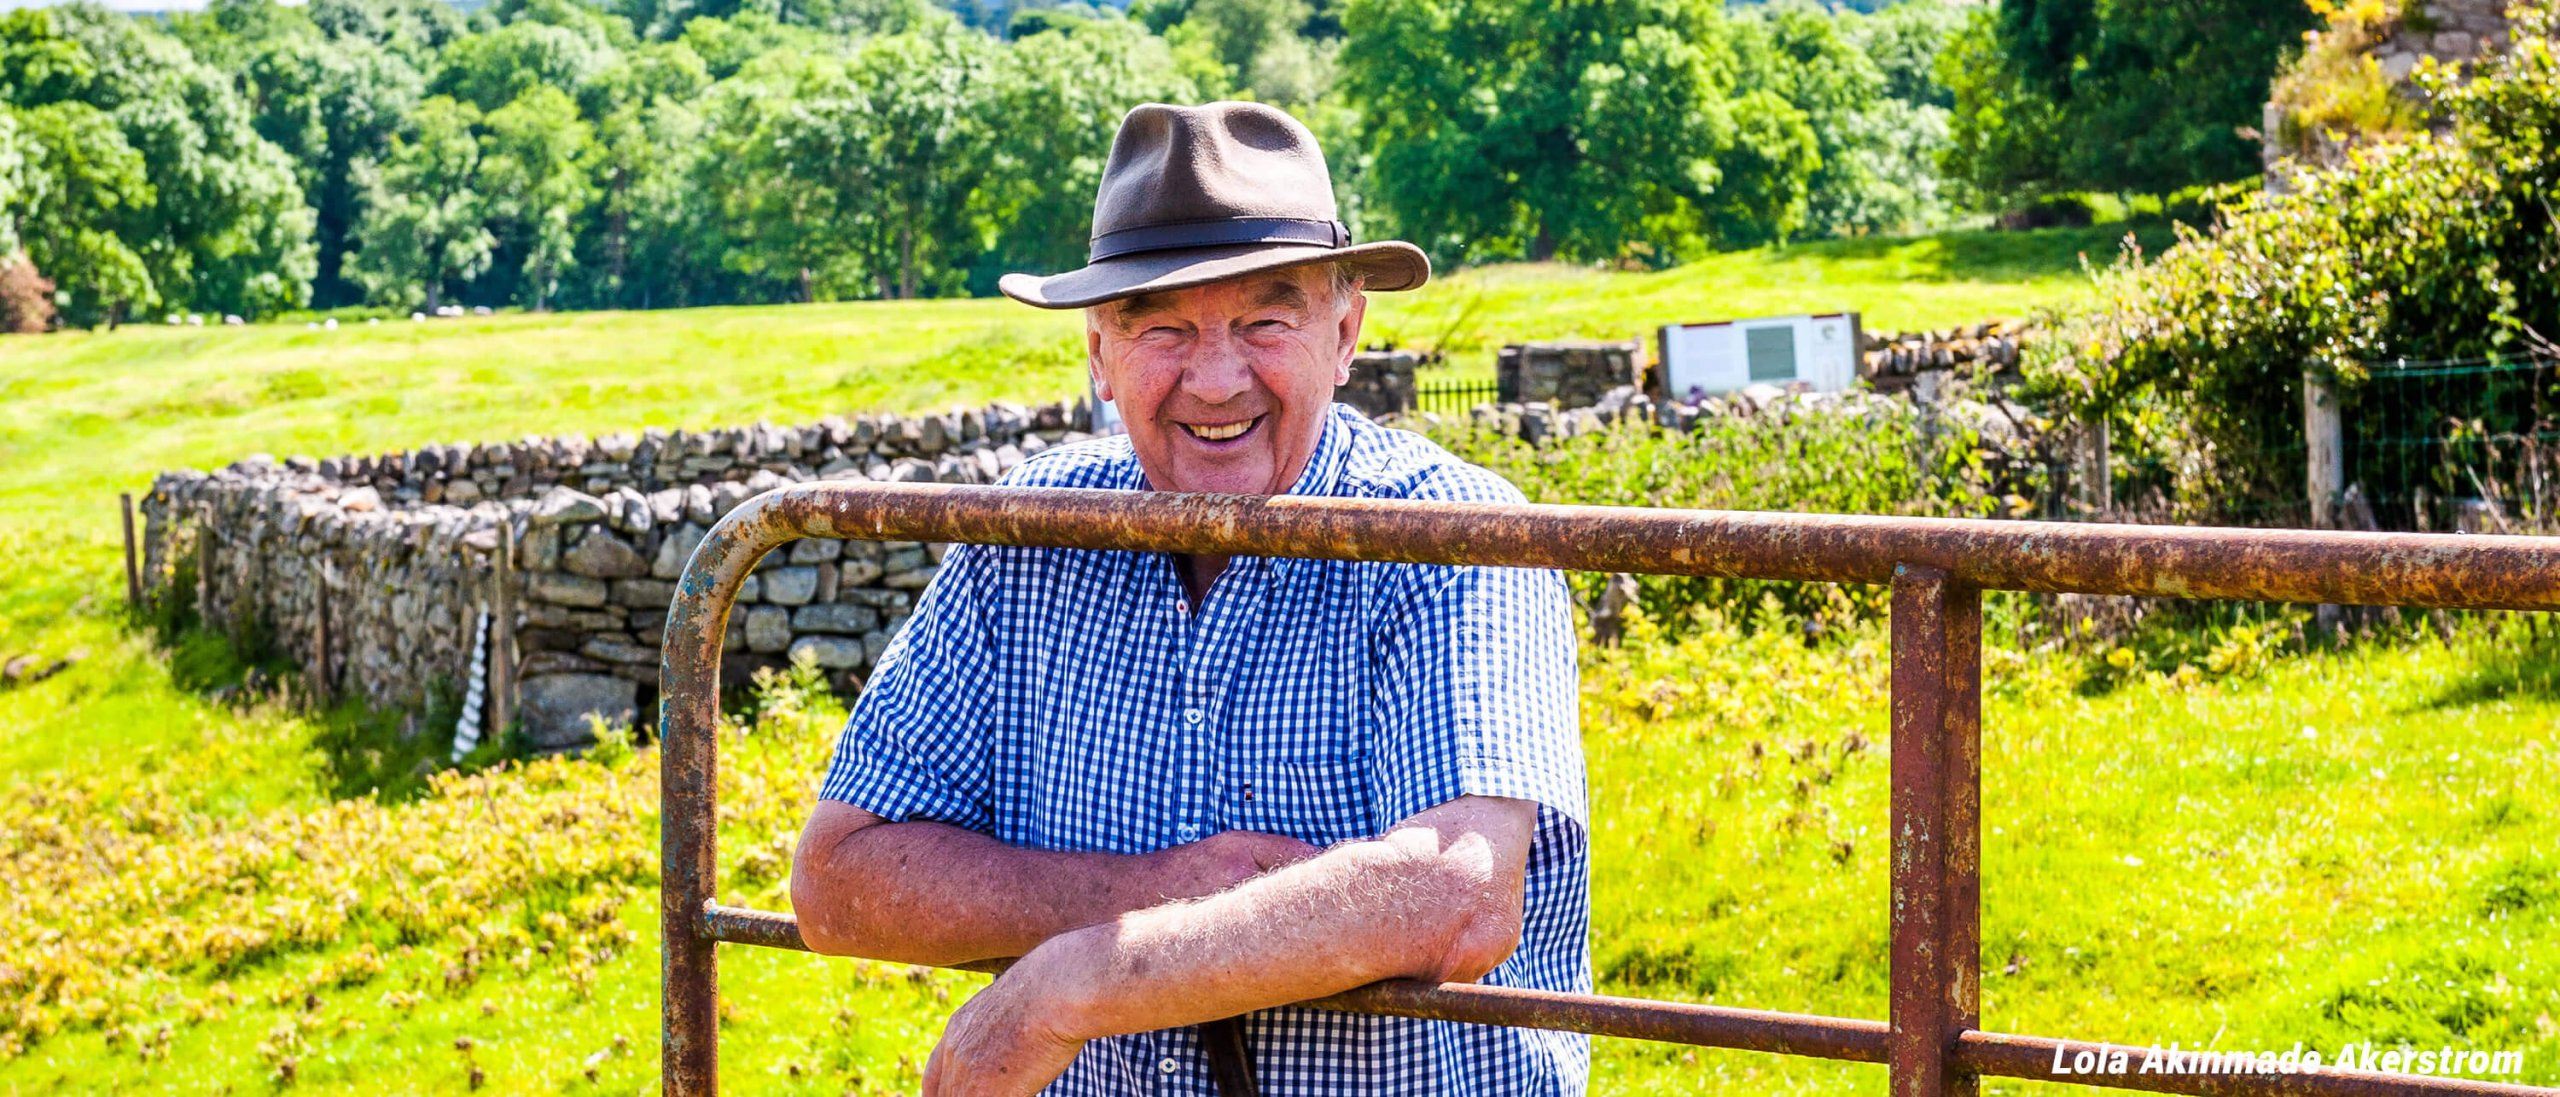 Ireland Tours with real Irish experiences, like meeting this friendly Irish farmer in Kilkenny